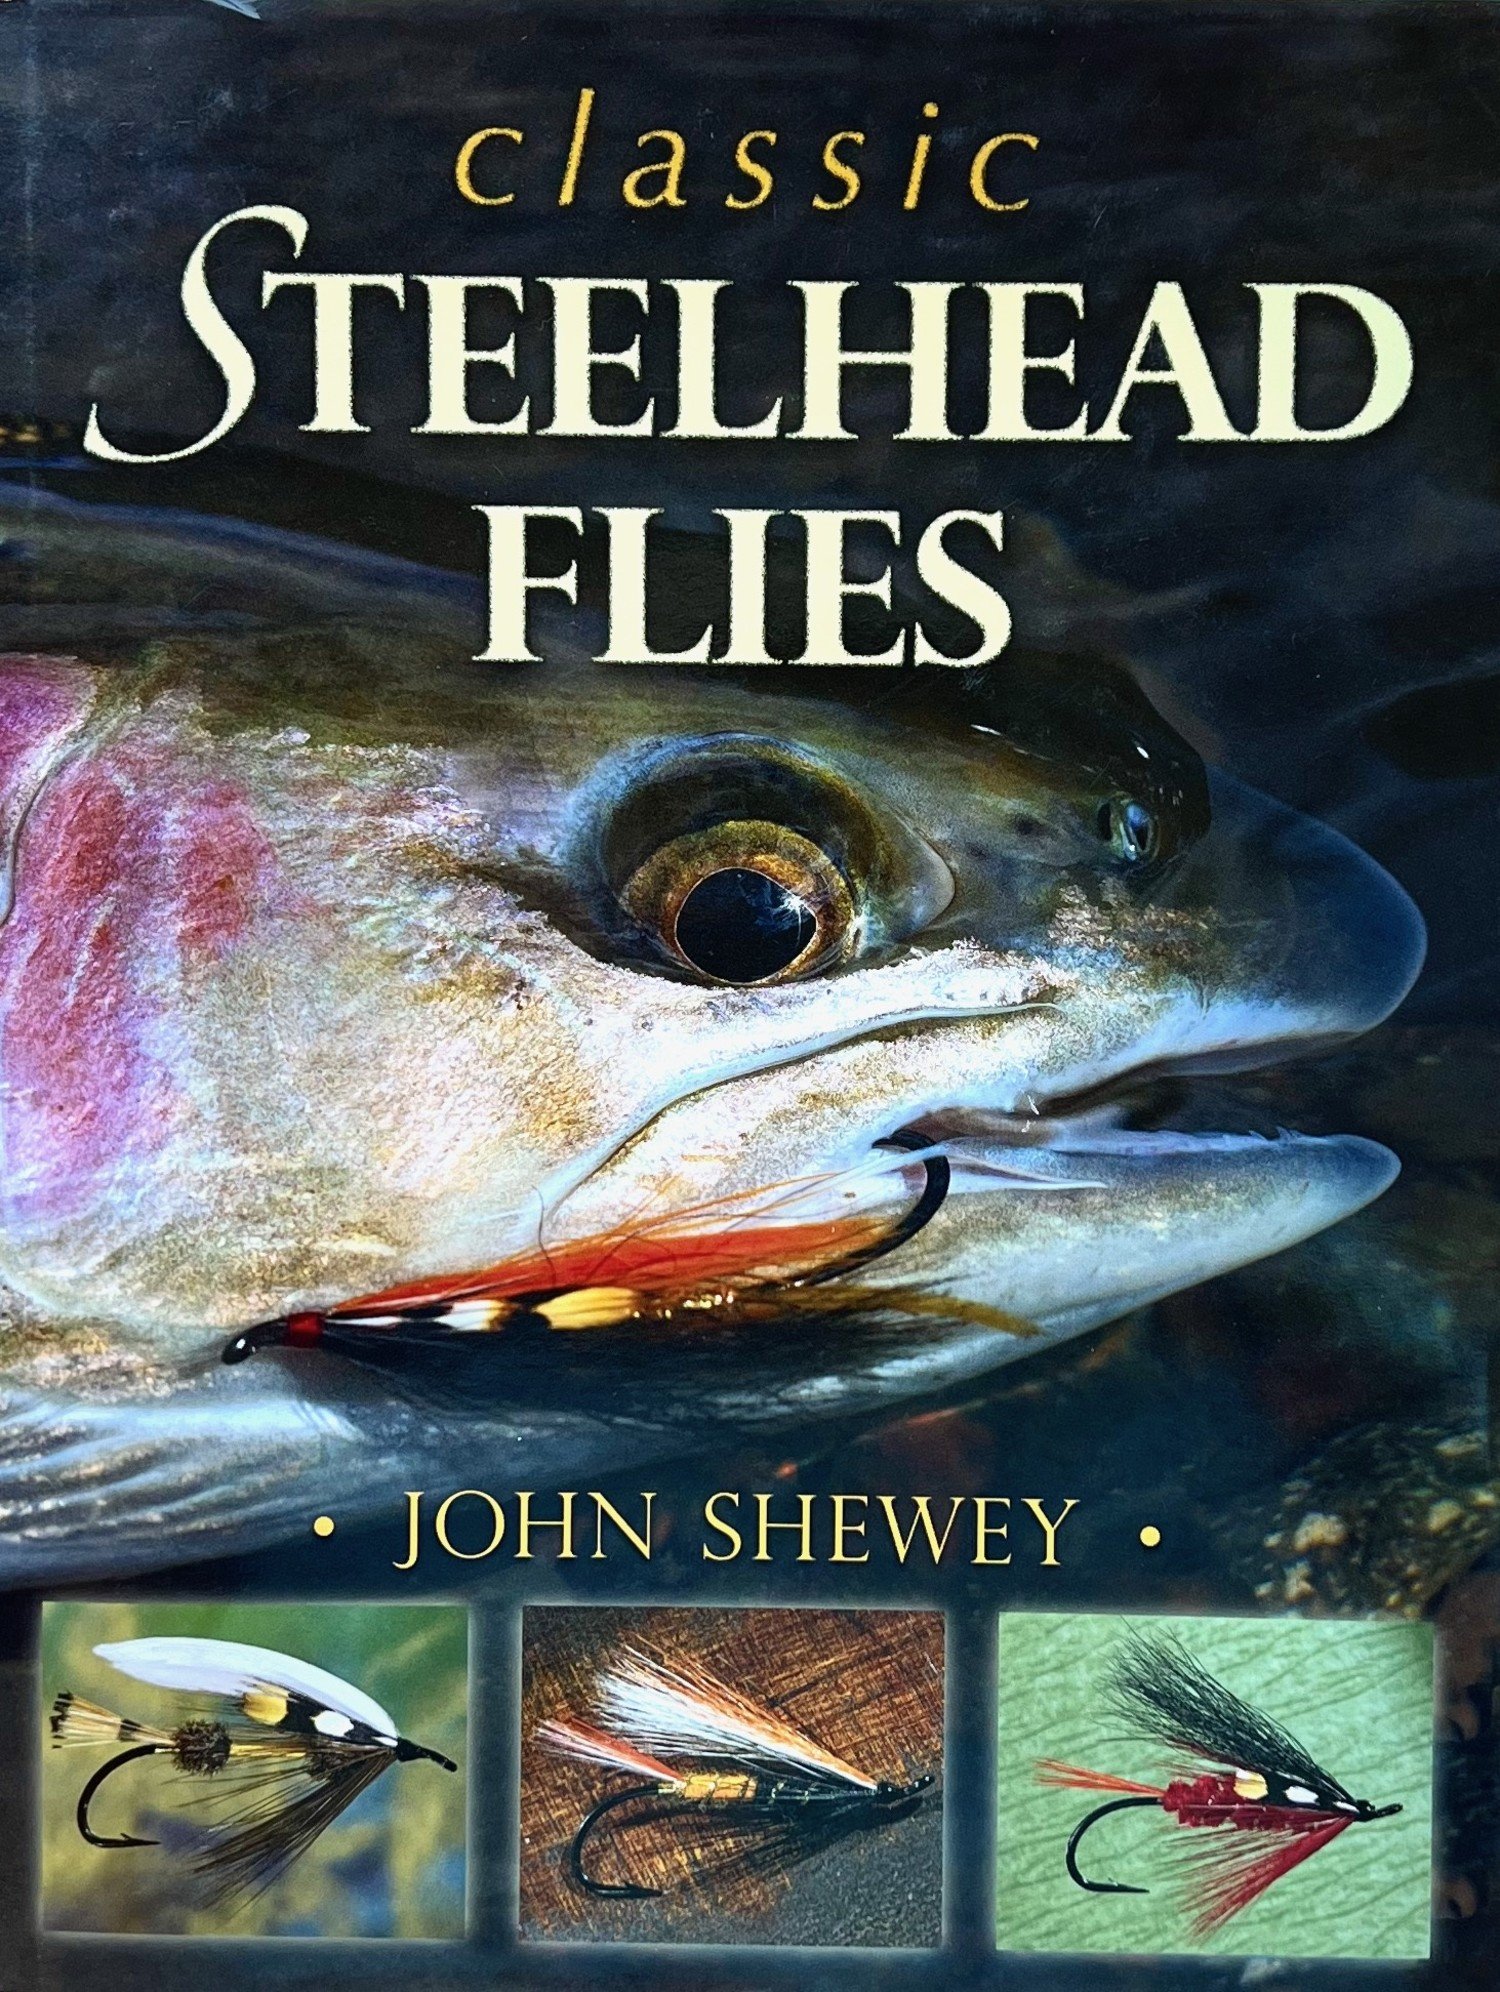 Classic Steelhead Flies, John Shewey - Royal Treatment Fly Fishing